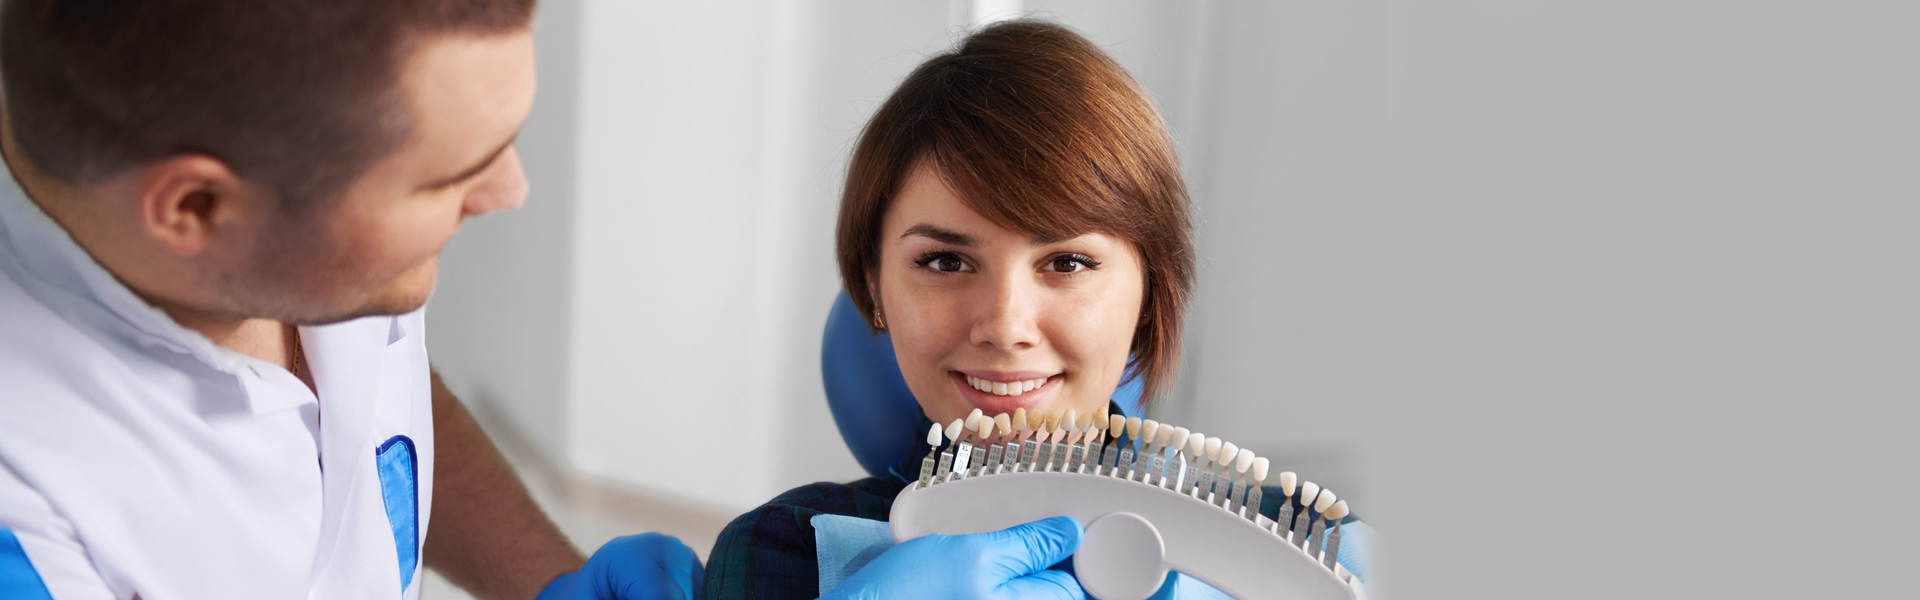 The Use Of Teeth Veneers As A Cosmetic Treatment.